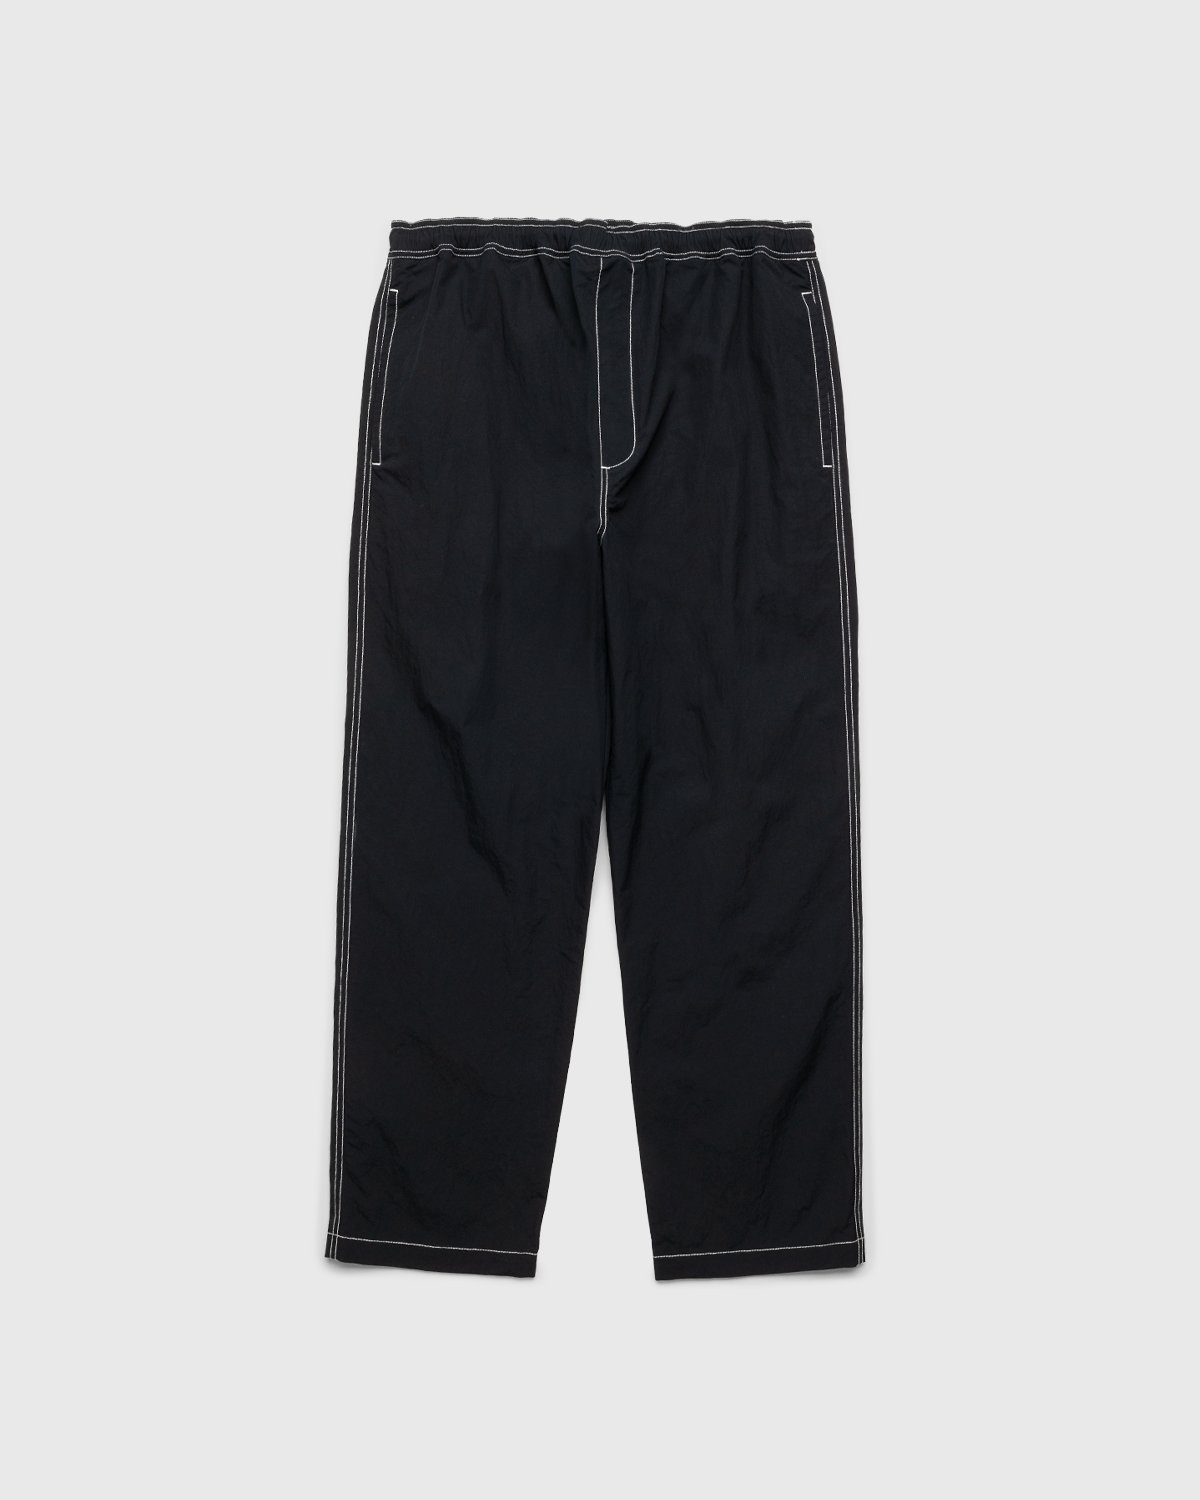 Highsnobiety – Contrast Brushed Nylon Elastic Pants Black - Pants - Black - Image 1